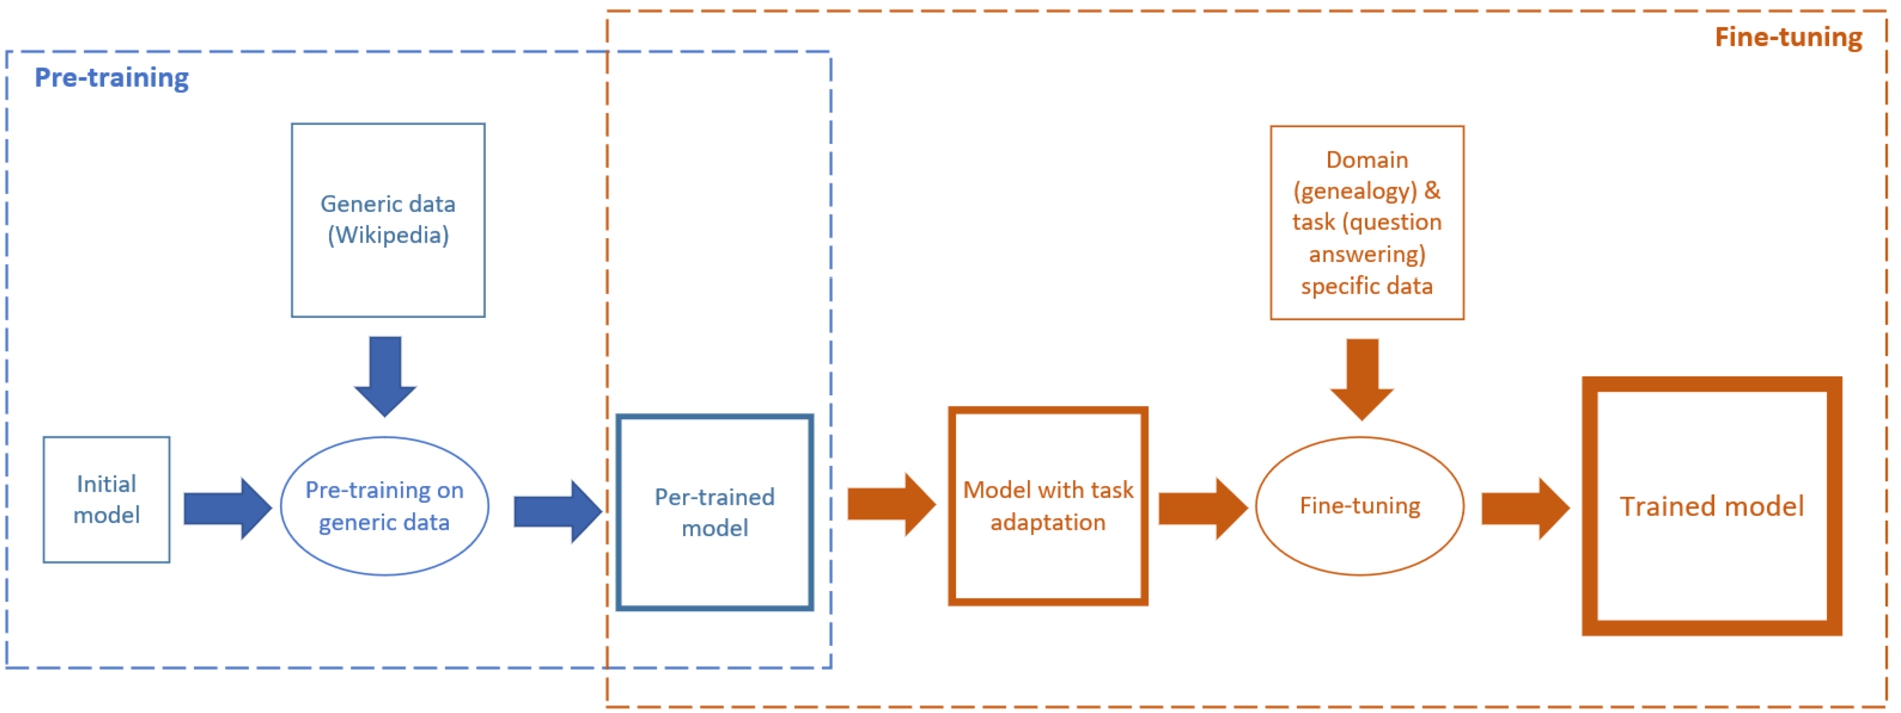 The DNN model fine-tuning process.